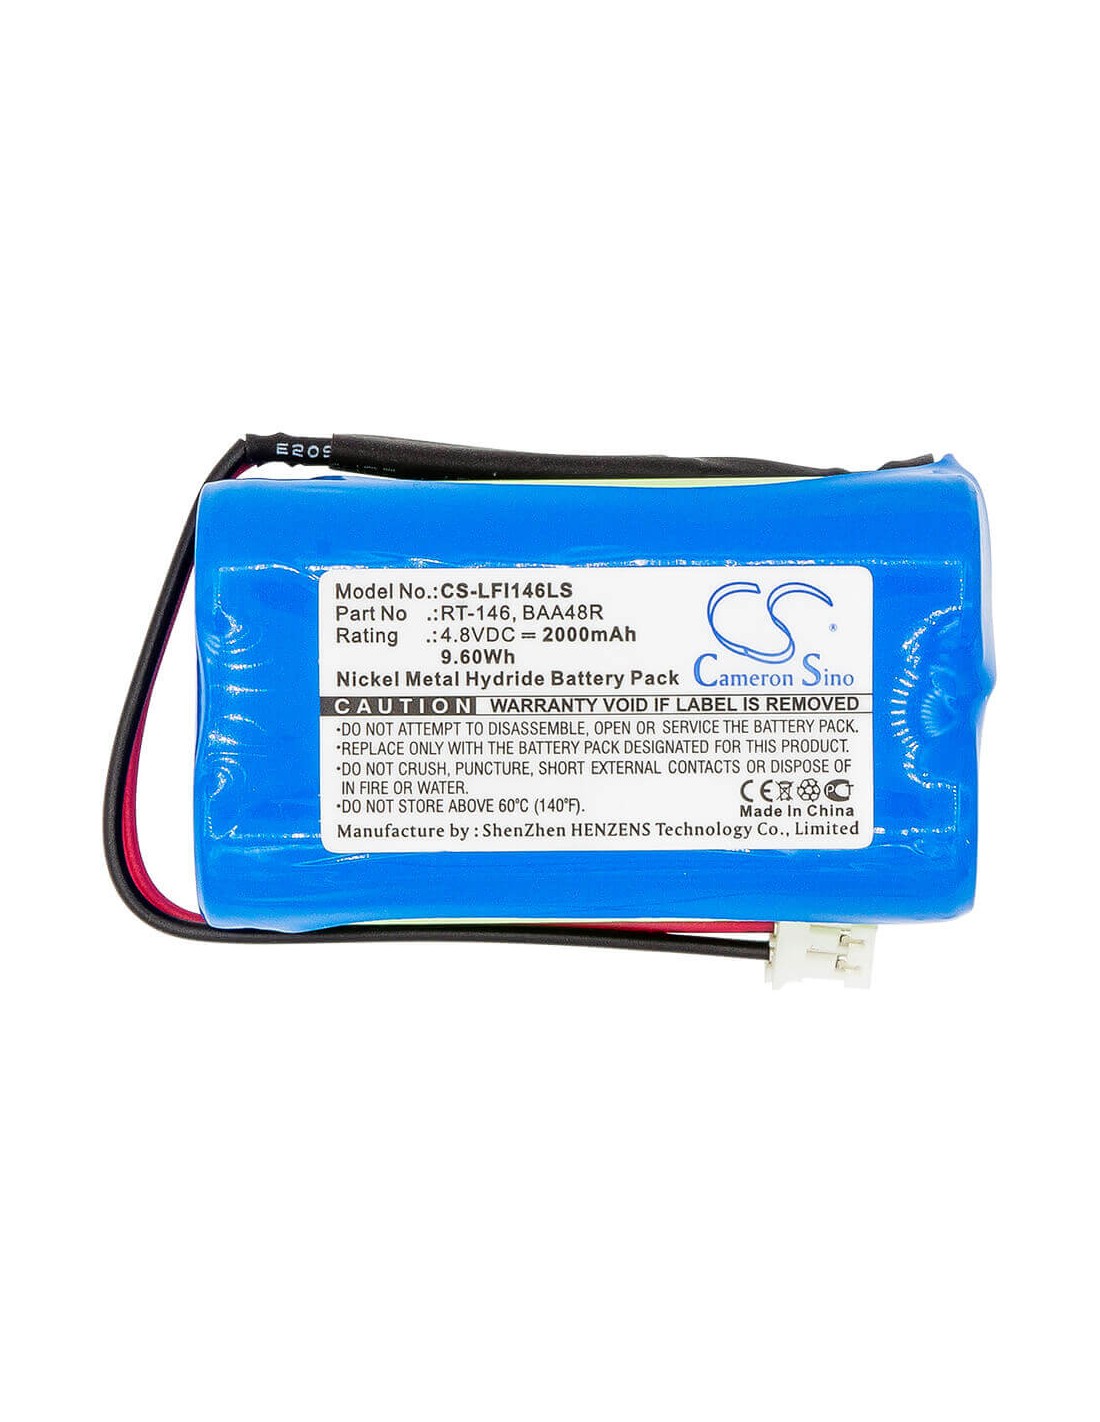 Extended Battery for Lfi, Daybrite Emergi-lite Baa48r, Light Alarms Bl93nc487, 4.8V, 2000mAh - 9.60Wh